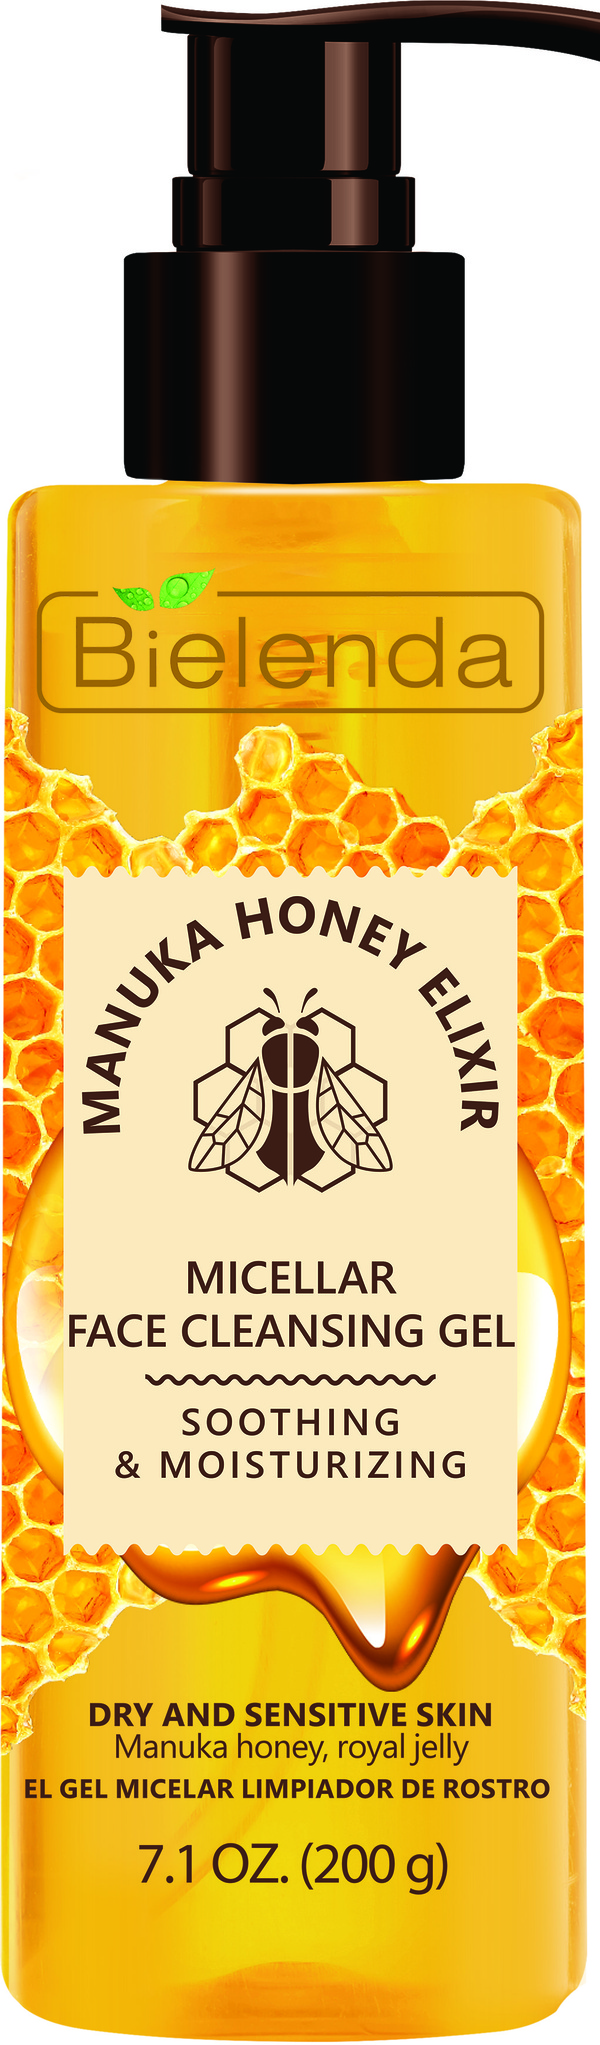 Bielenda Manuka Honey Nutri Elixir Micellar Face Cleansing Gel